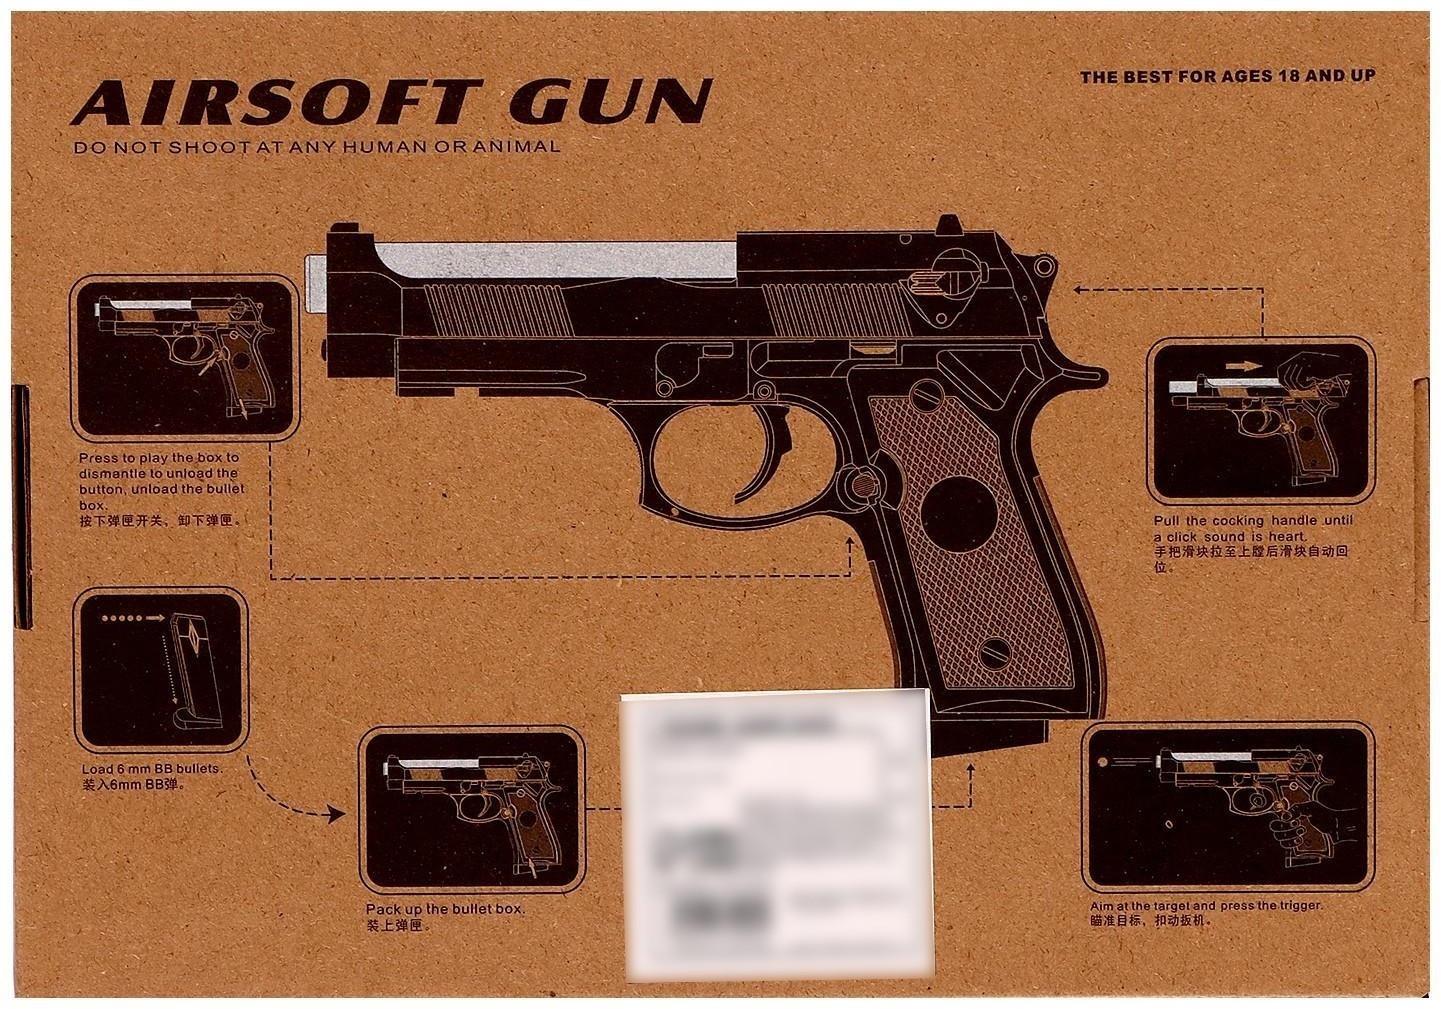 Пистолет Beretta S.T.A.R.S, с металлическими элементами